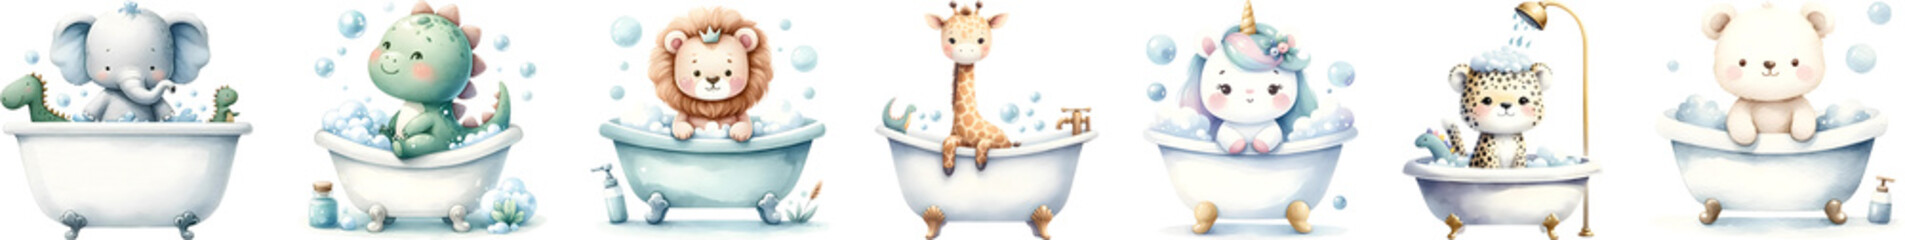 Baby animal shower in bath, watercolor illustration.